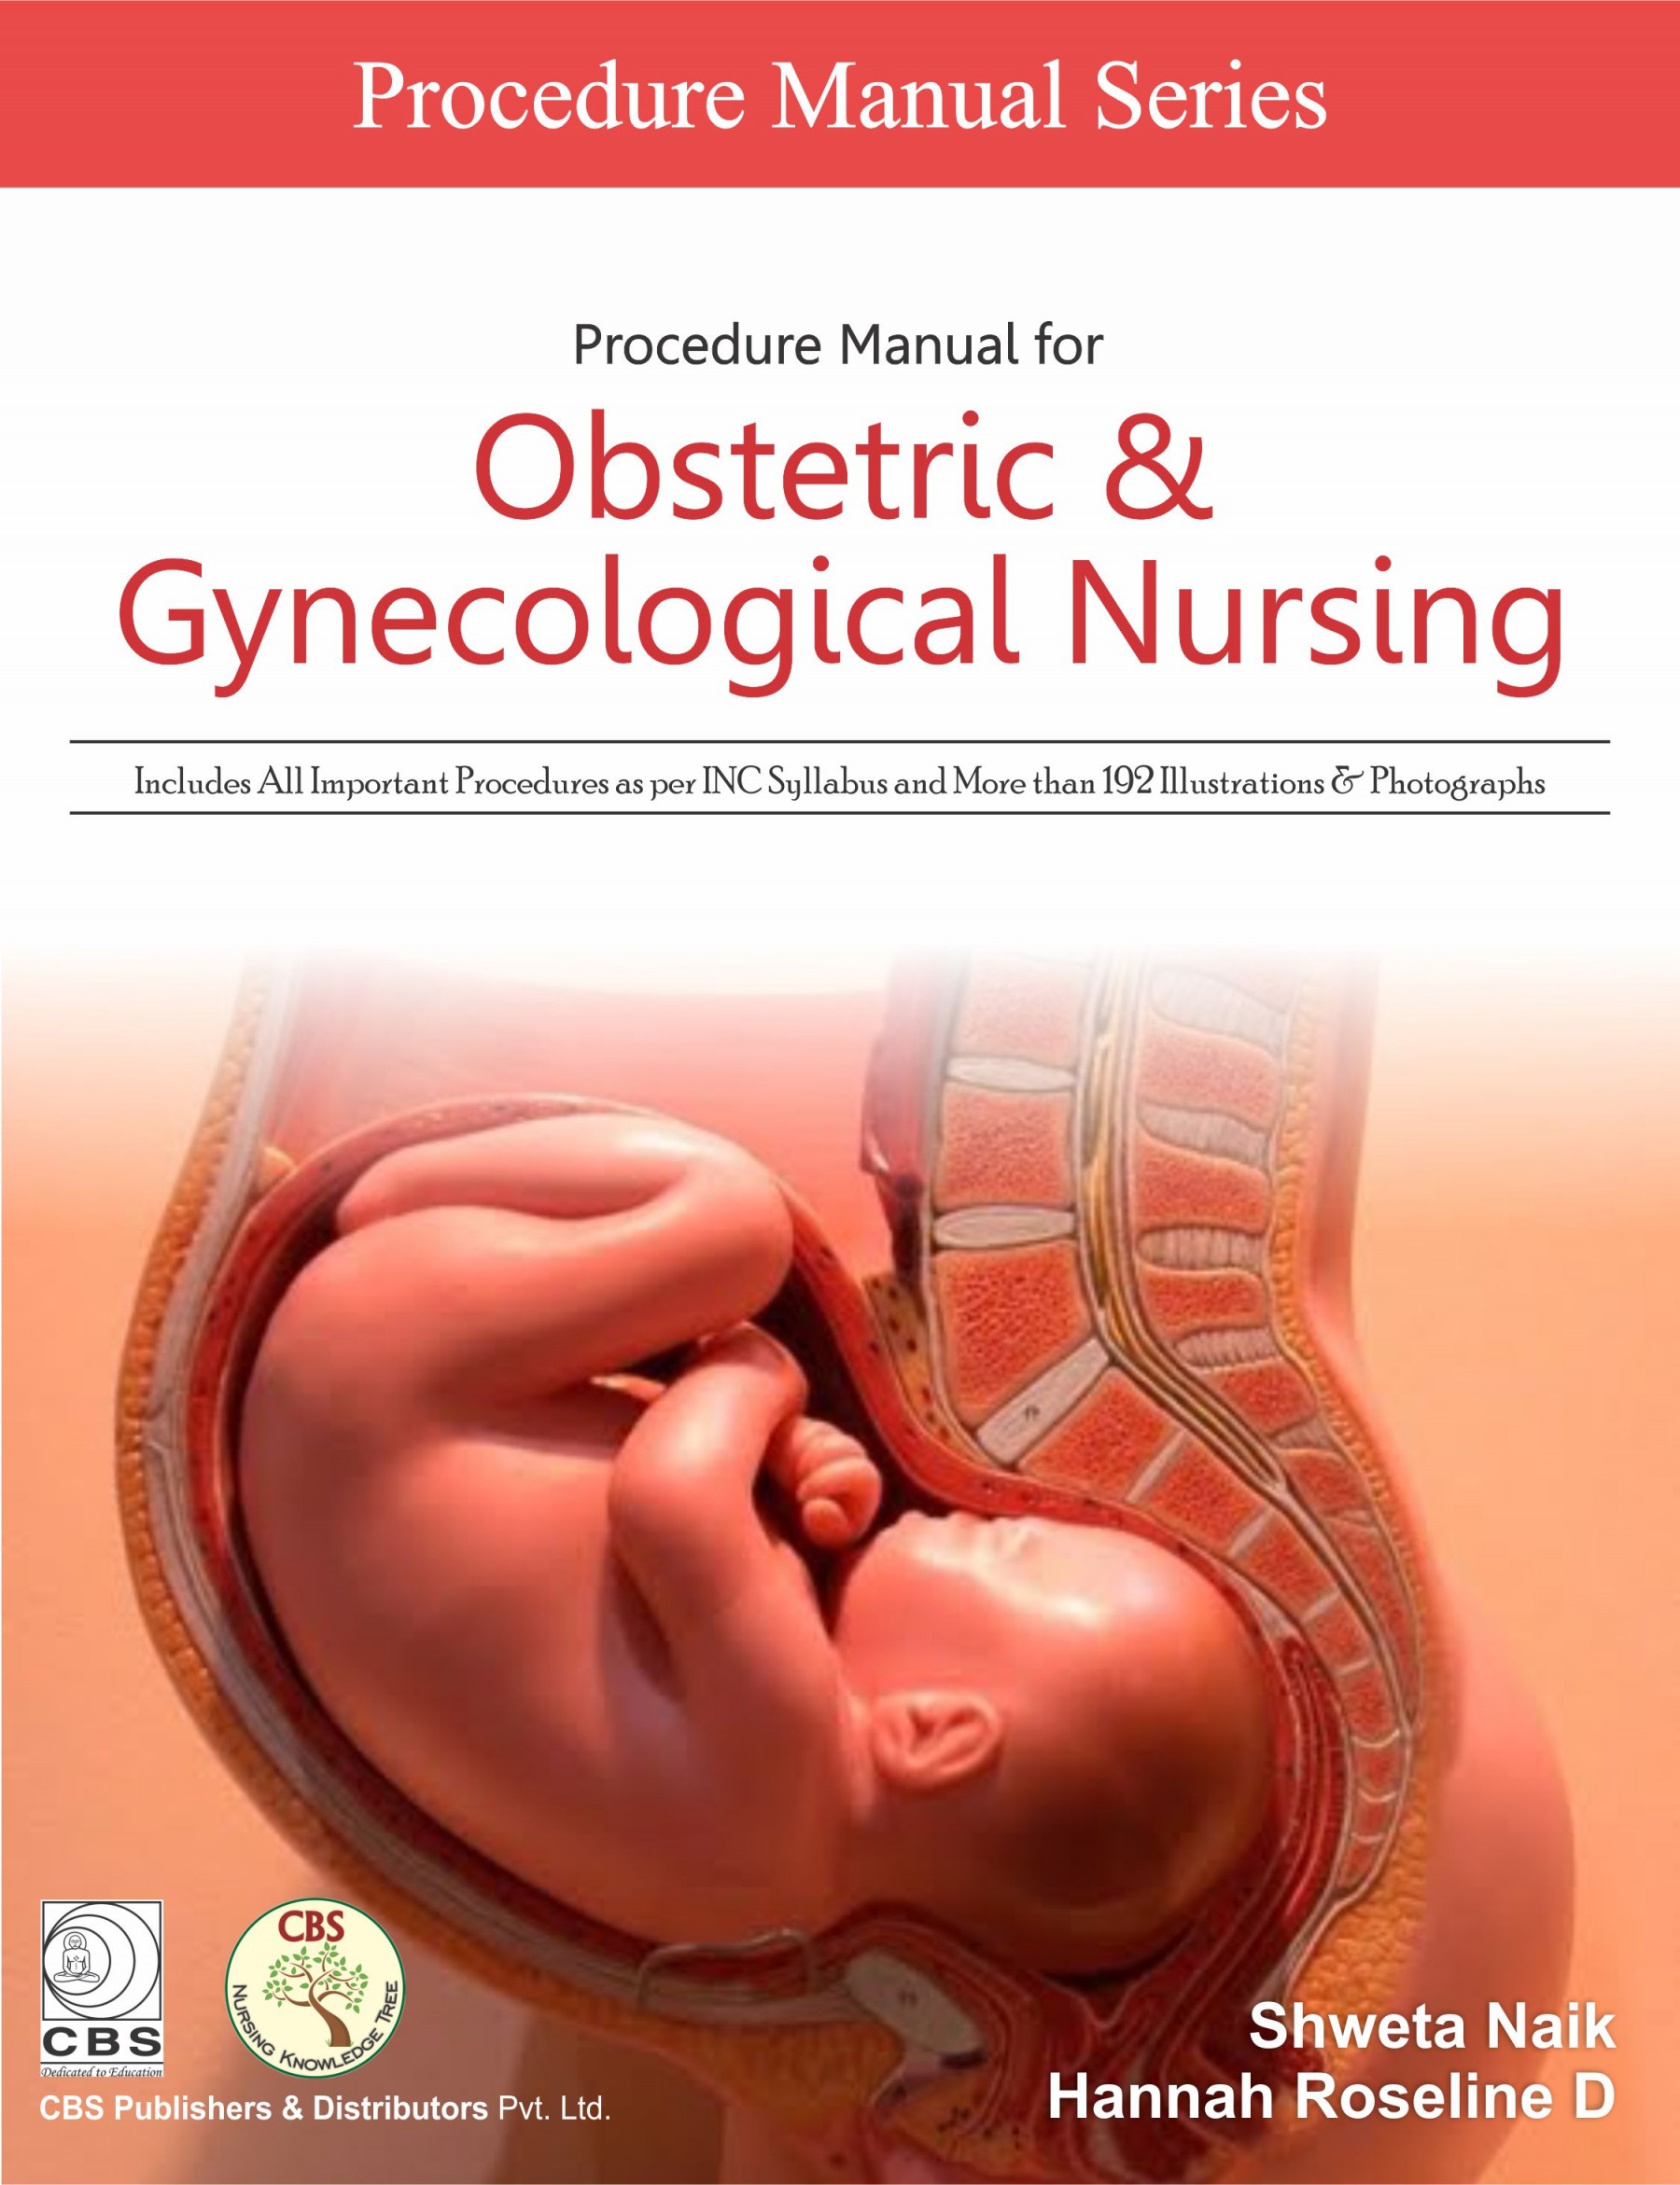 Procedure Manual for Obstetrics & Gynecological Nursing